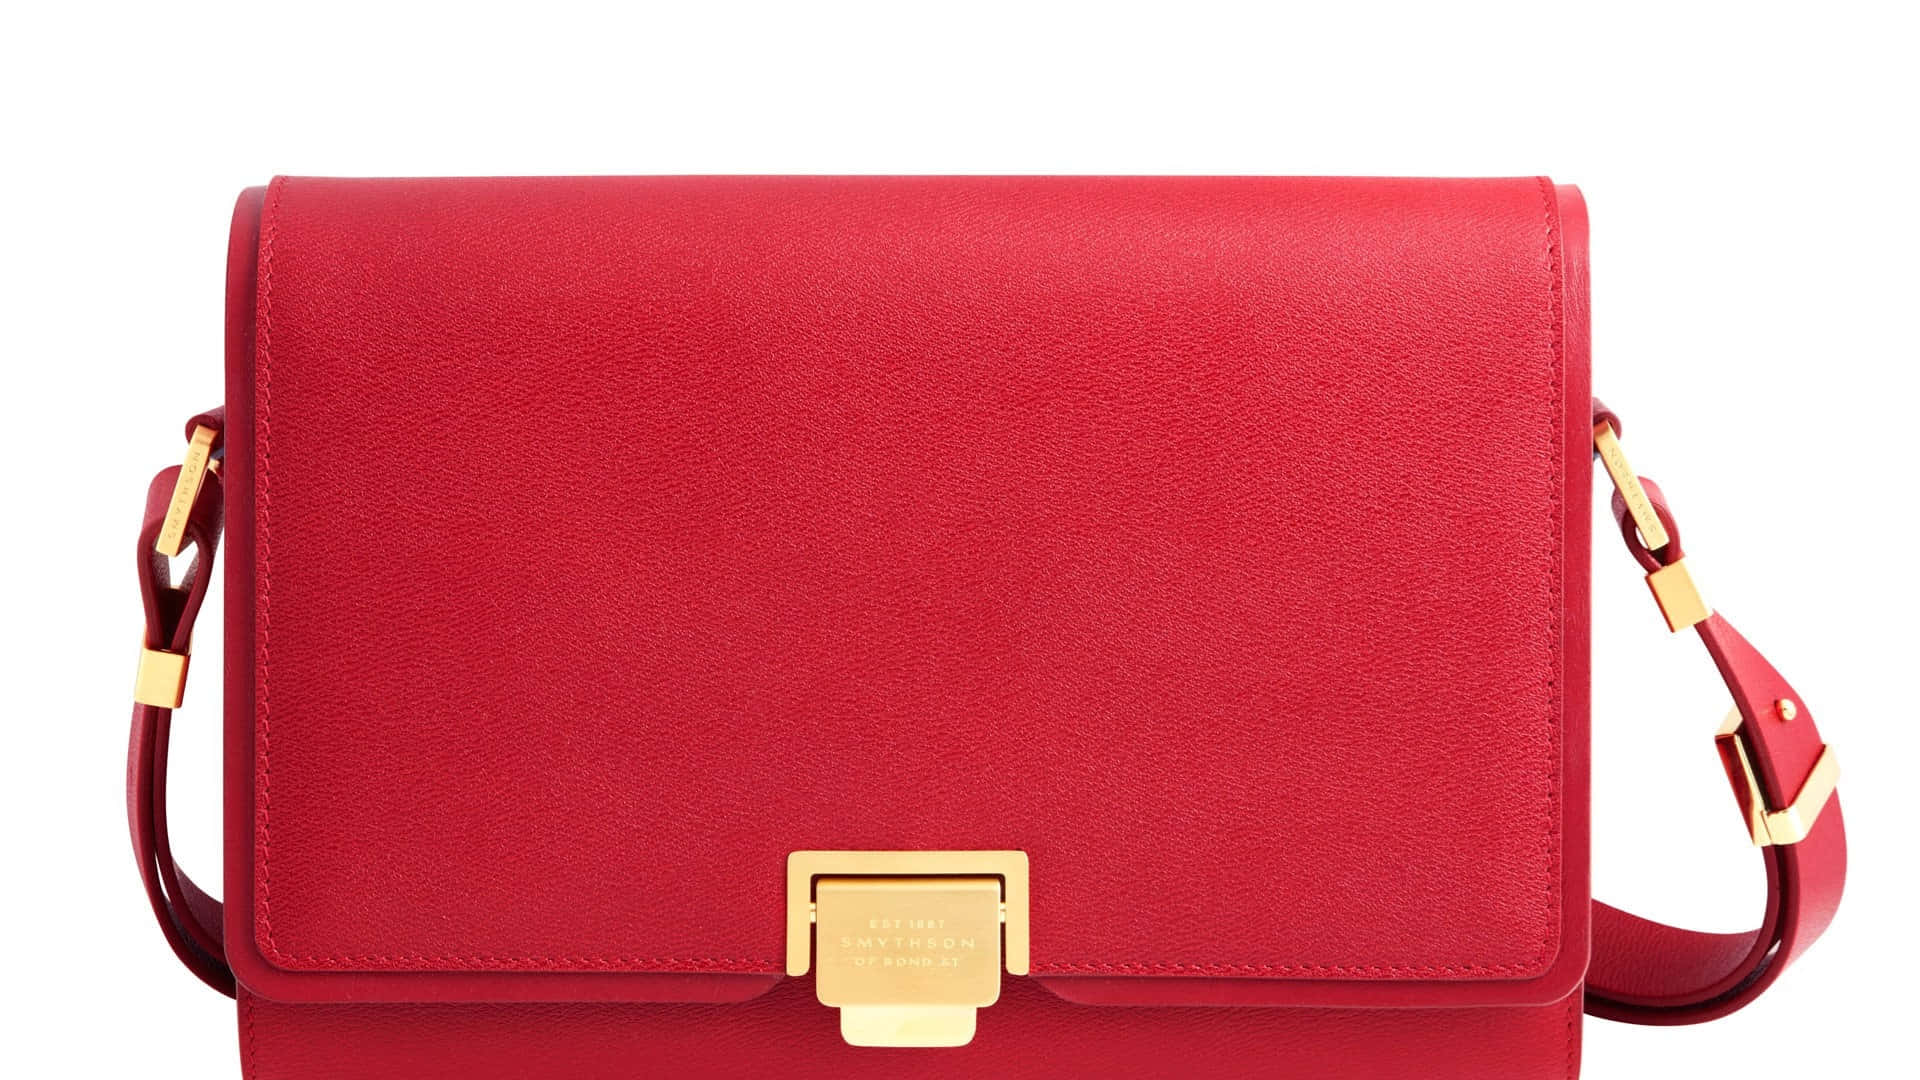 Classy red handbag on a wooden table Wallpaper